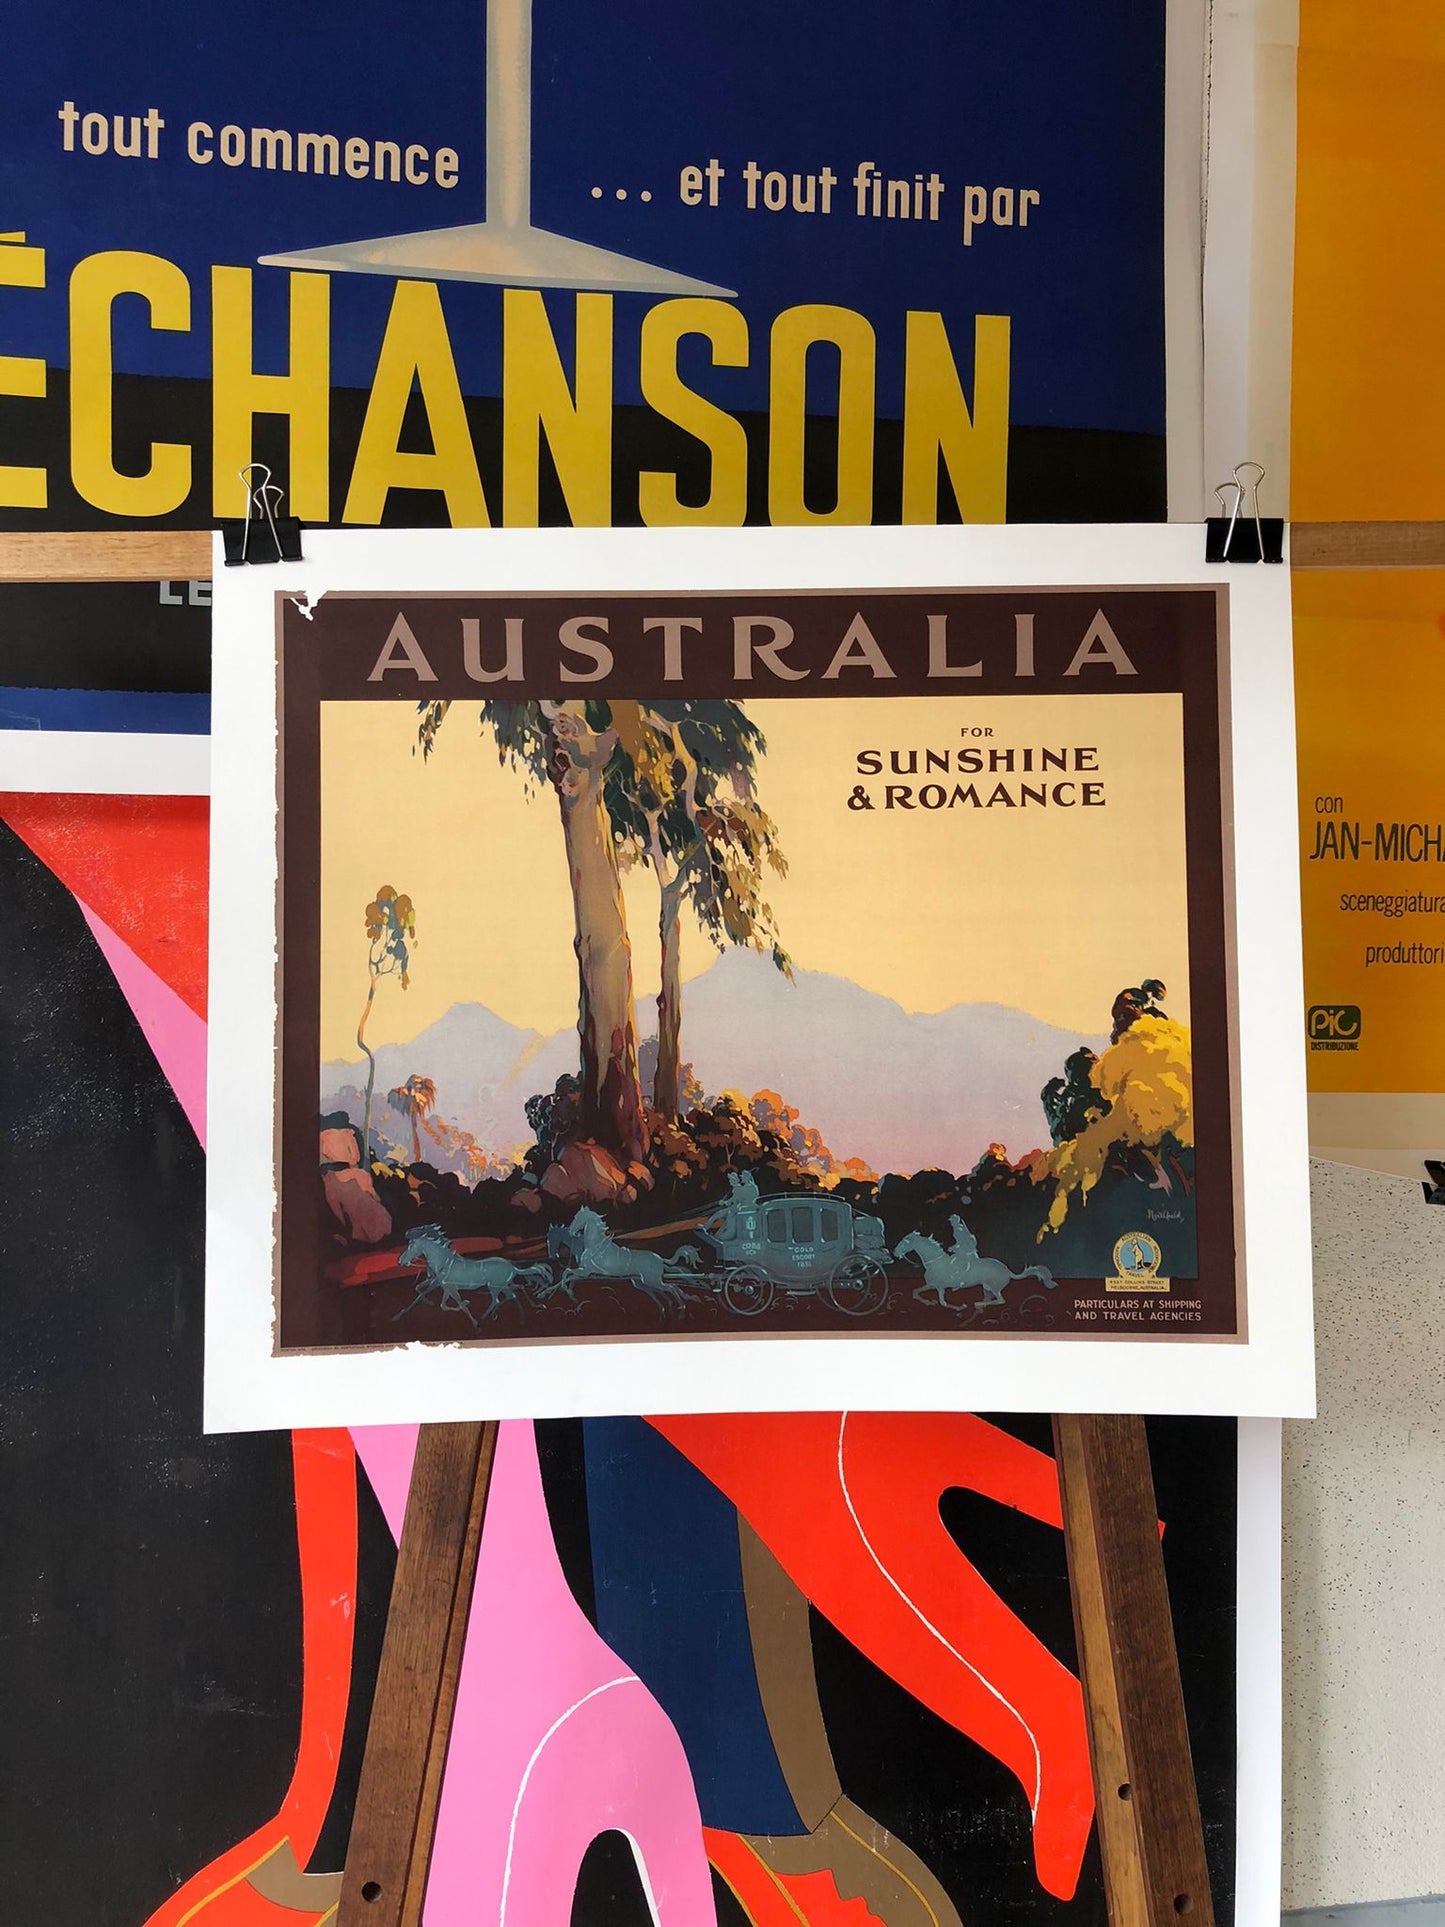 "Australia, for Sunshine and Romance" by James Northfield